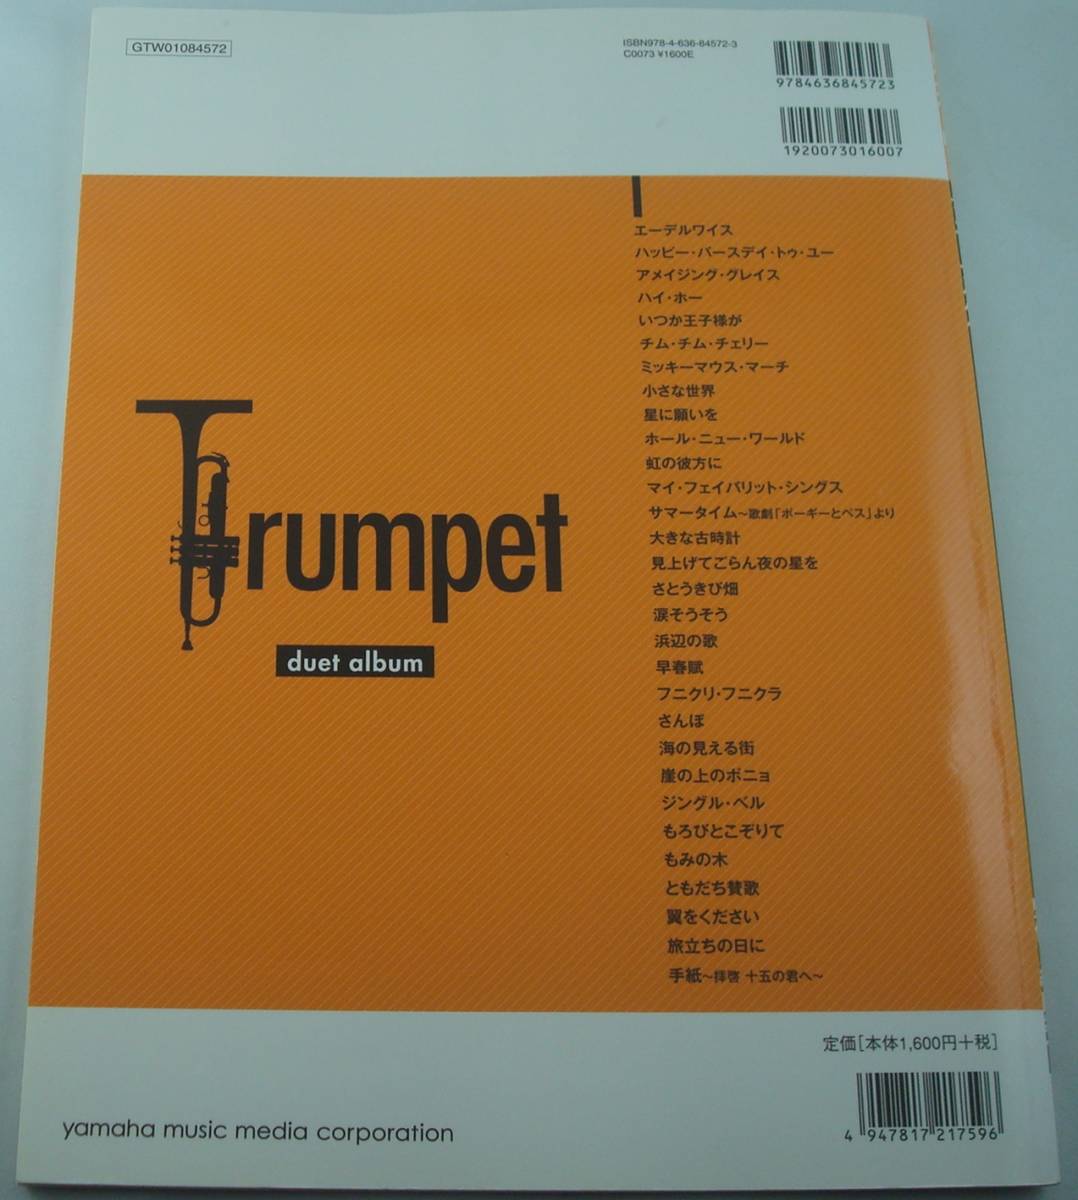  free shipping * musical score trumpet Duet album Disney Ghibli pops 